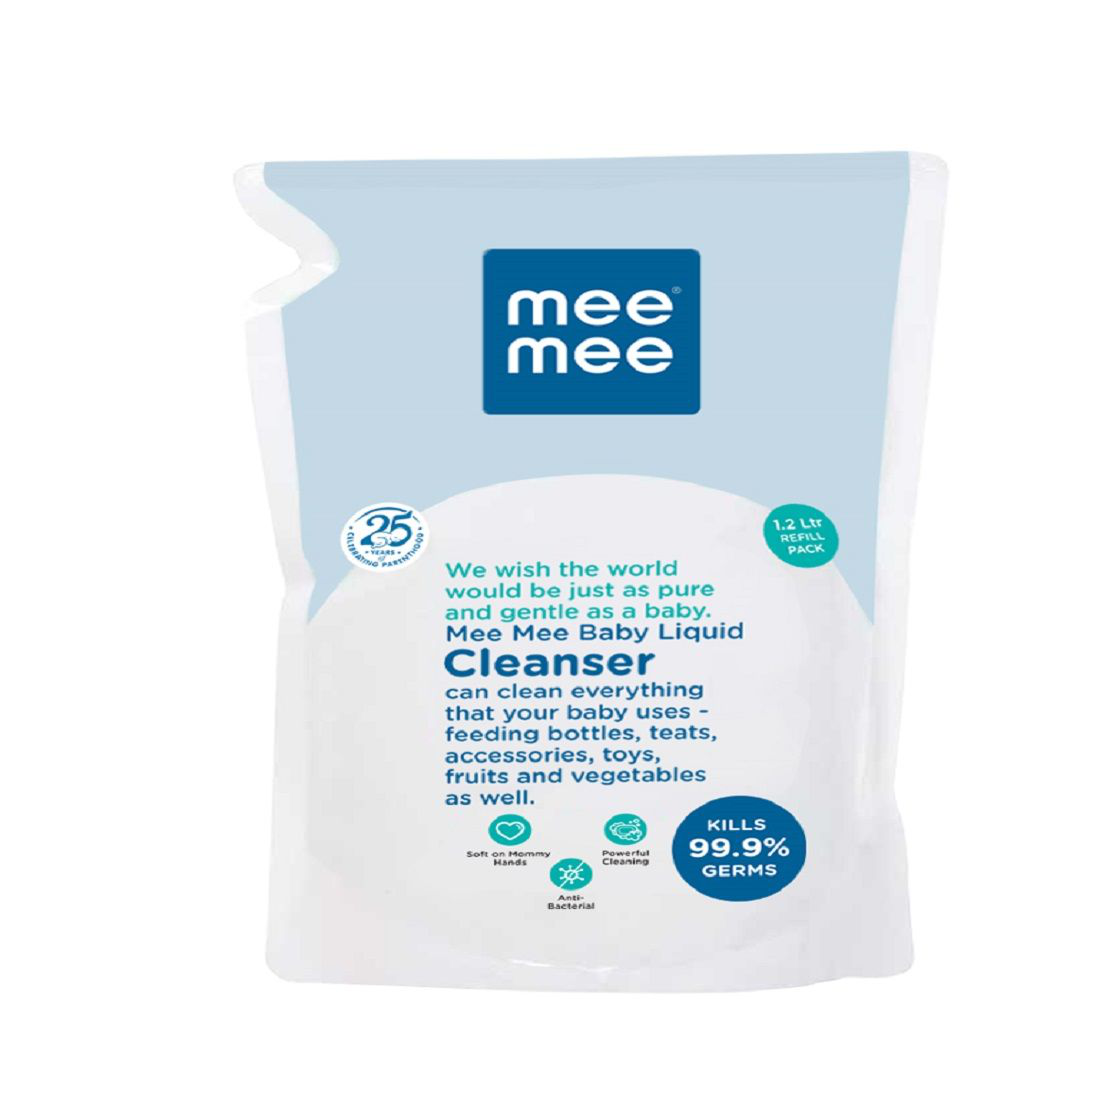 Mee Mee Anti-Bacterial Baby Liquid Cleanser (1.2 L - Refill Pack)